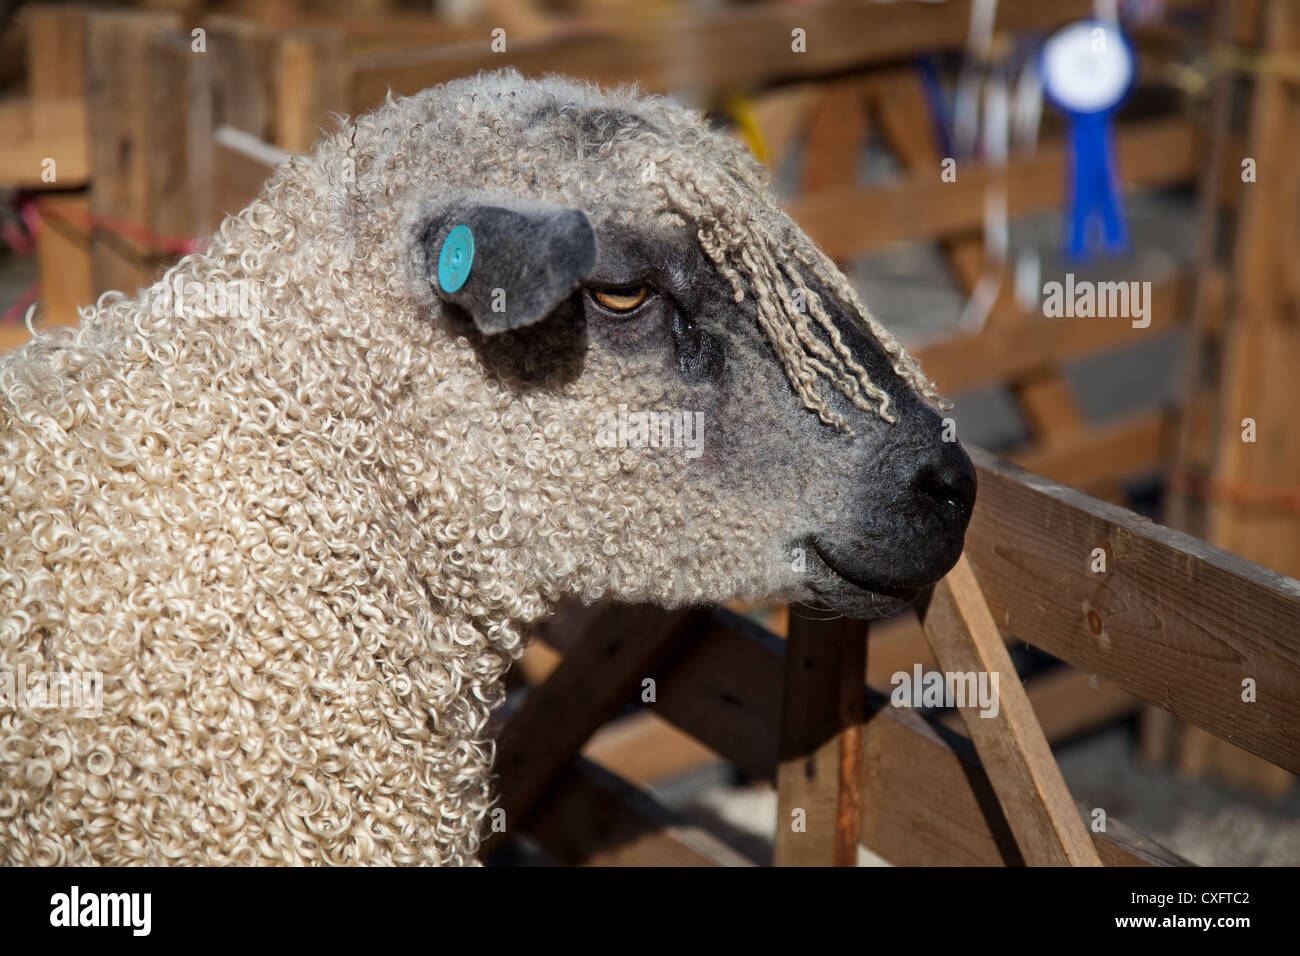 Wensleydale the largest British Sheep Sheep Breeds at the Masham Sheep Fair, North Yorkshire Dales, UK Stock Photo